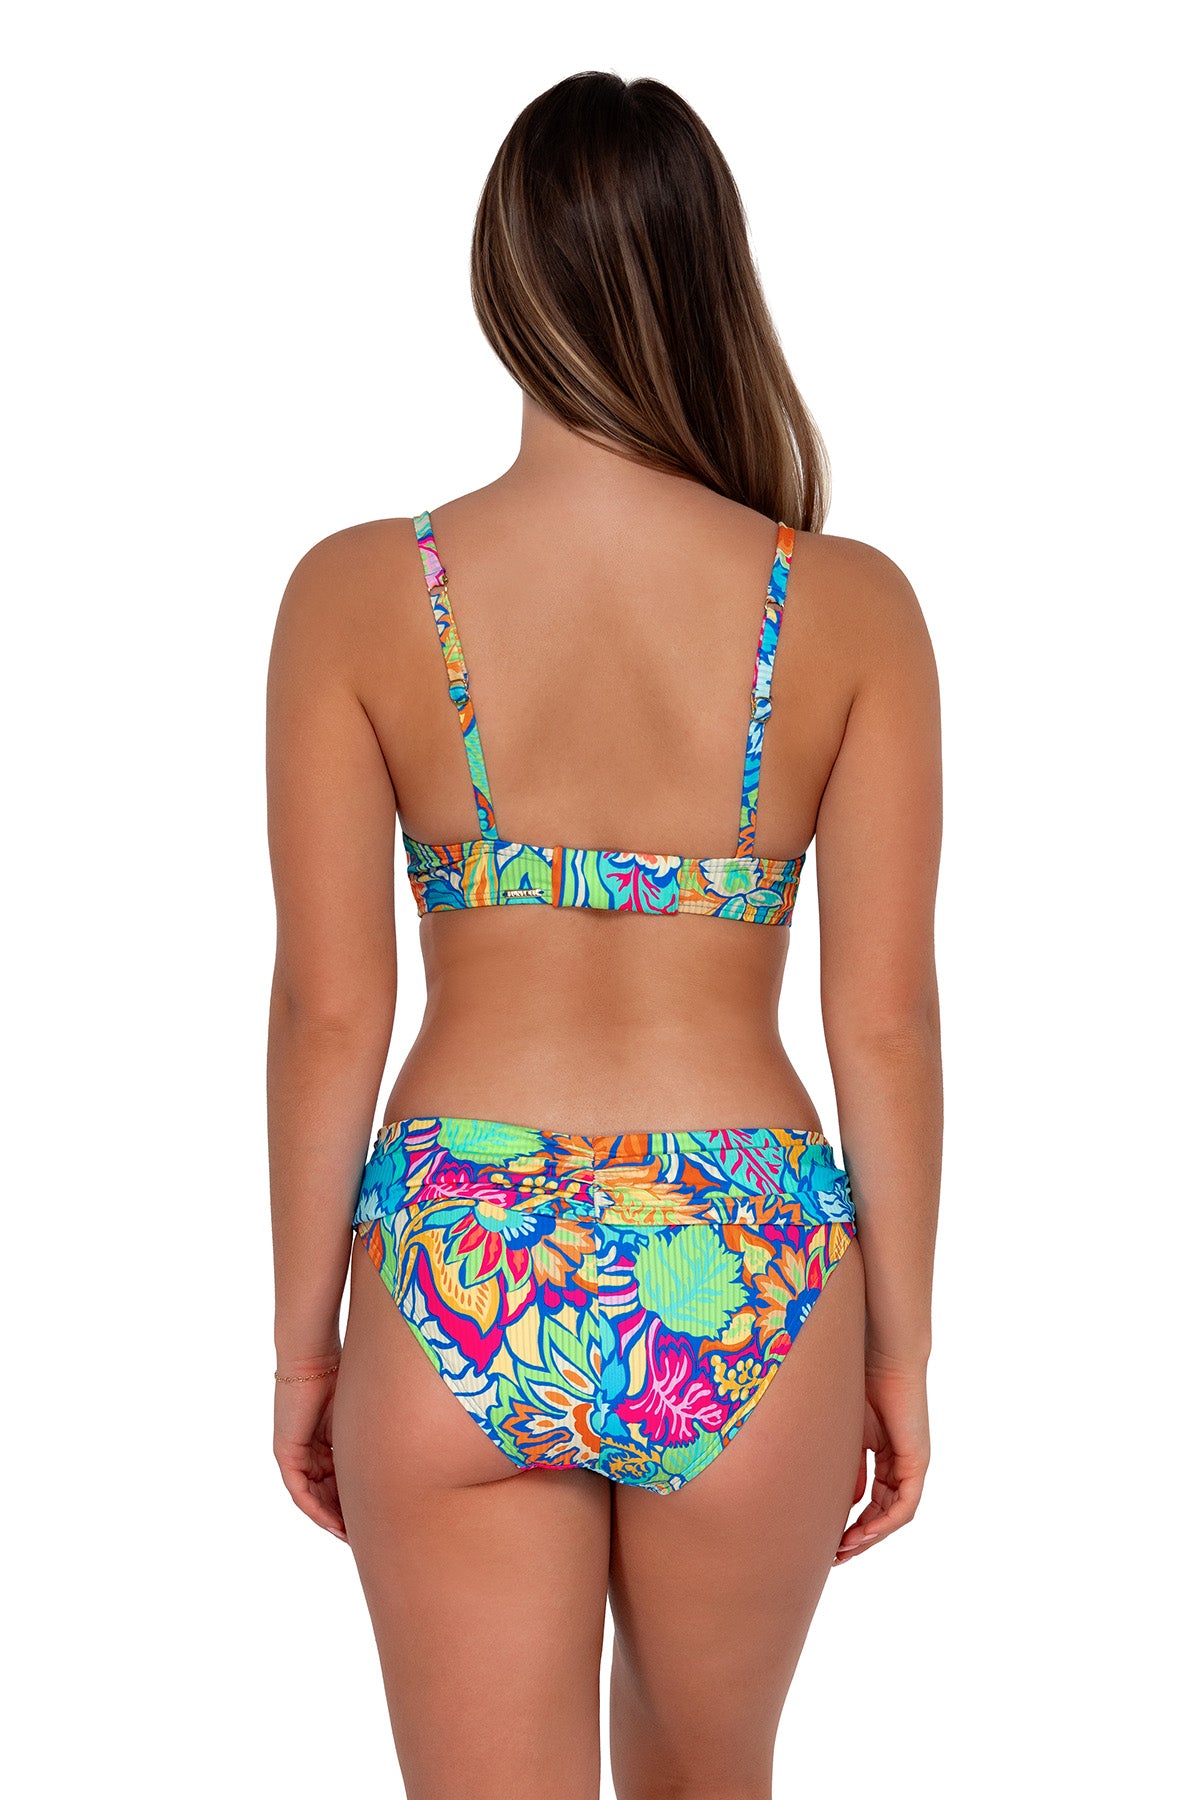 Back pose #1 of Taylor wearing Sunsets Fiji Sandbar Rib Kauai Keyhole Top with matching Unforgettable Bottom swim hipster